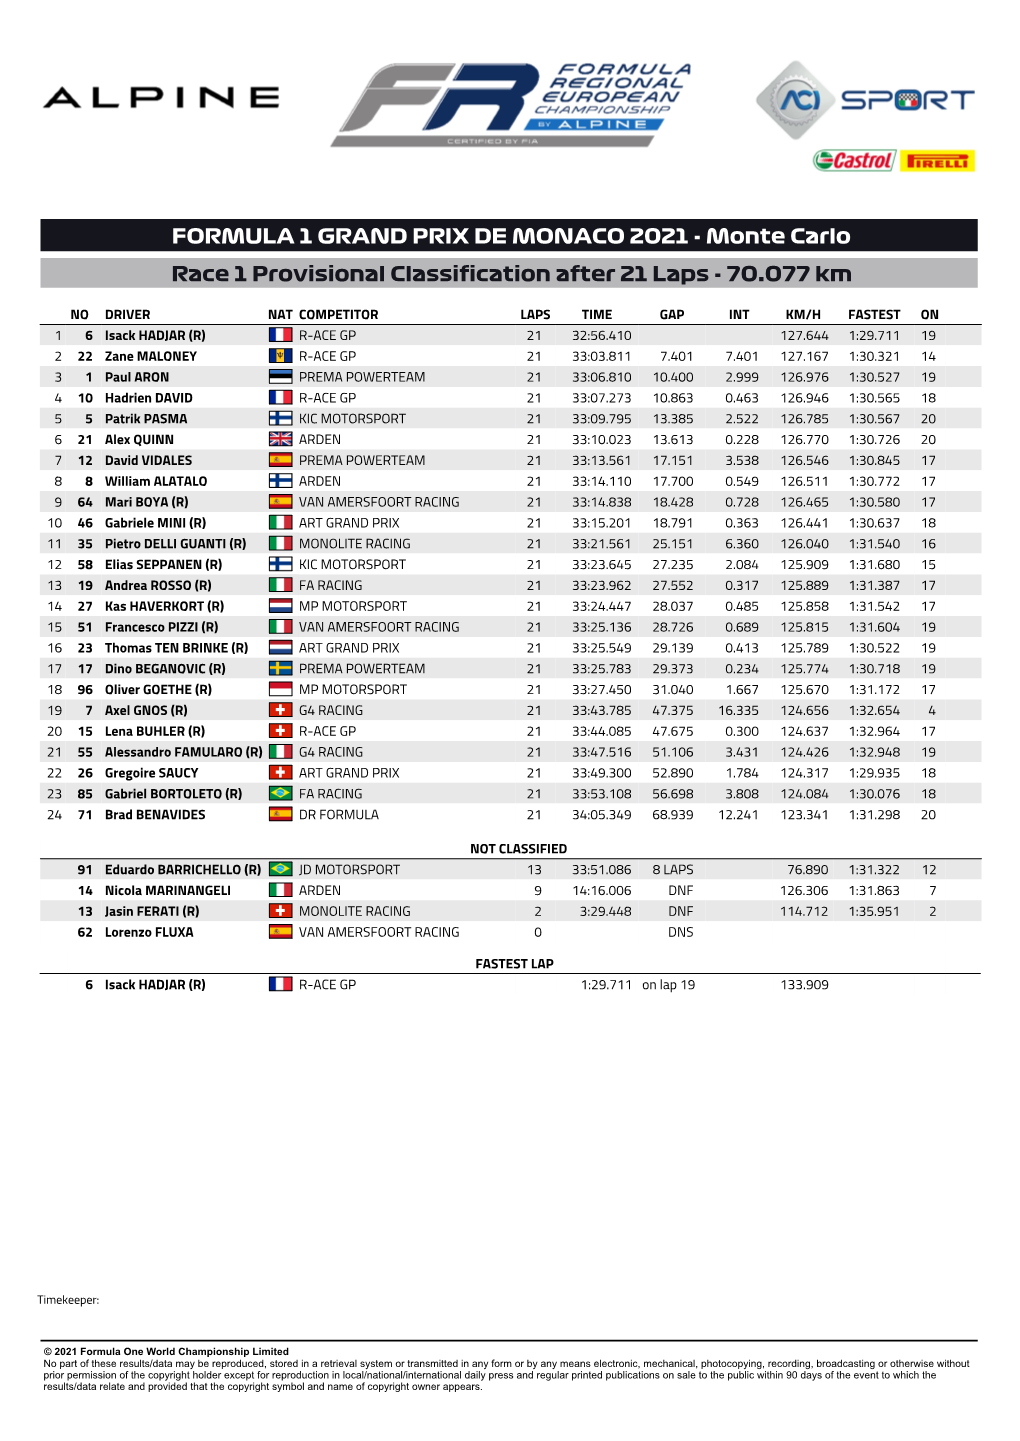 FORMULA 1 GRAND PRIX DE MONACO 2021 - Monte Carlo Race 1 Provisional Classification After 21 Laps - 70.077 Km